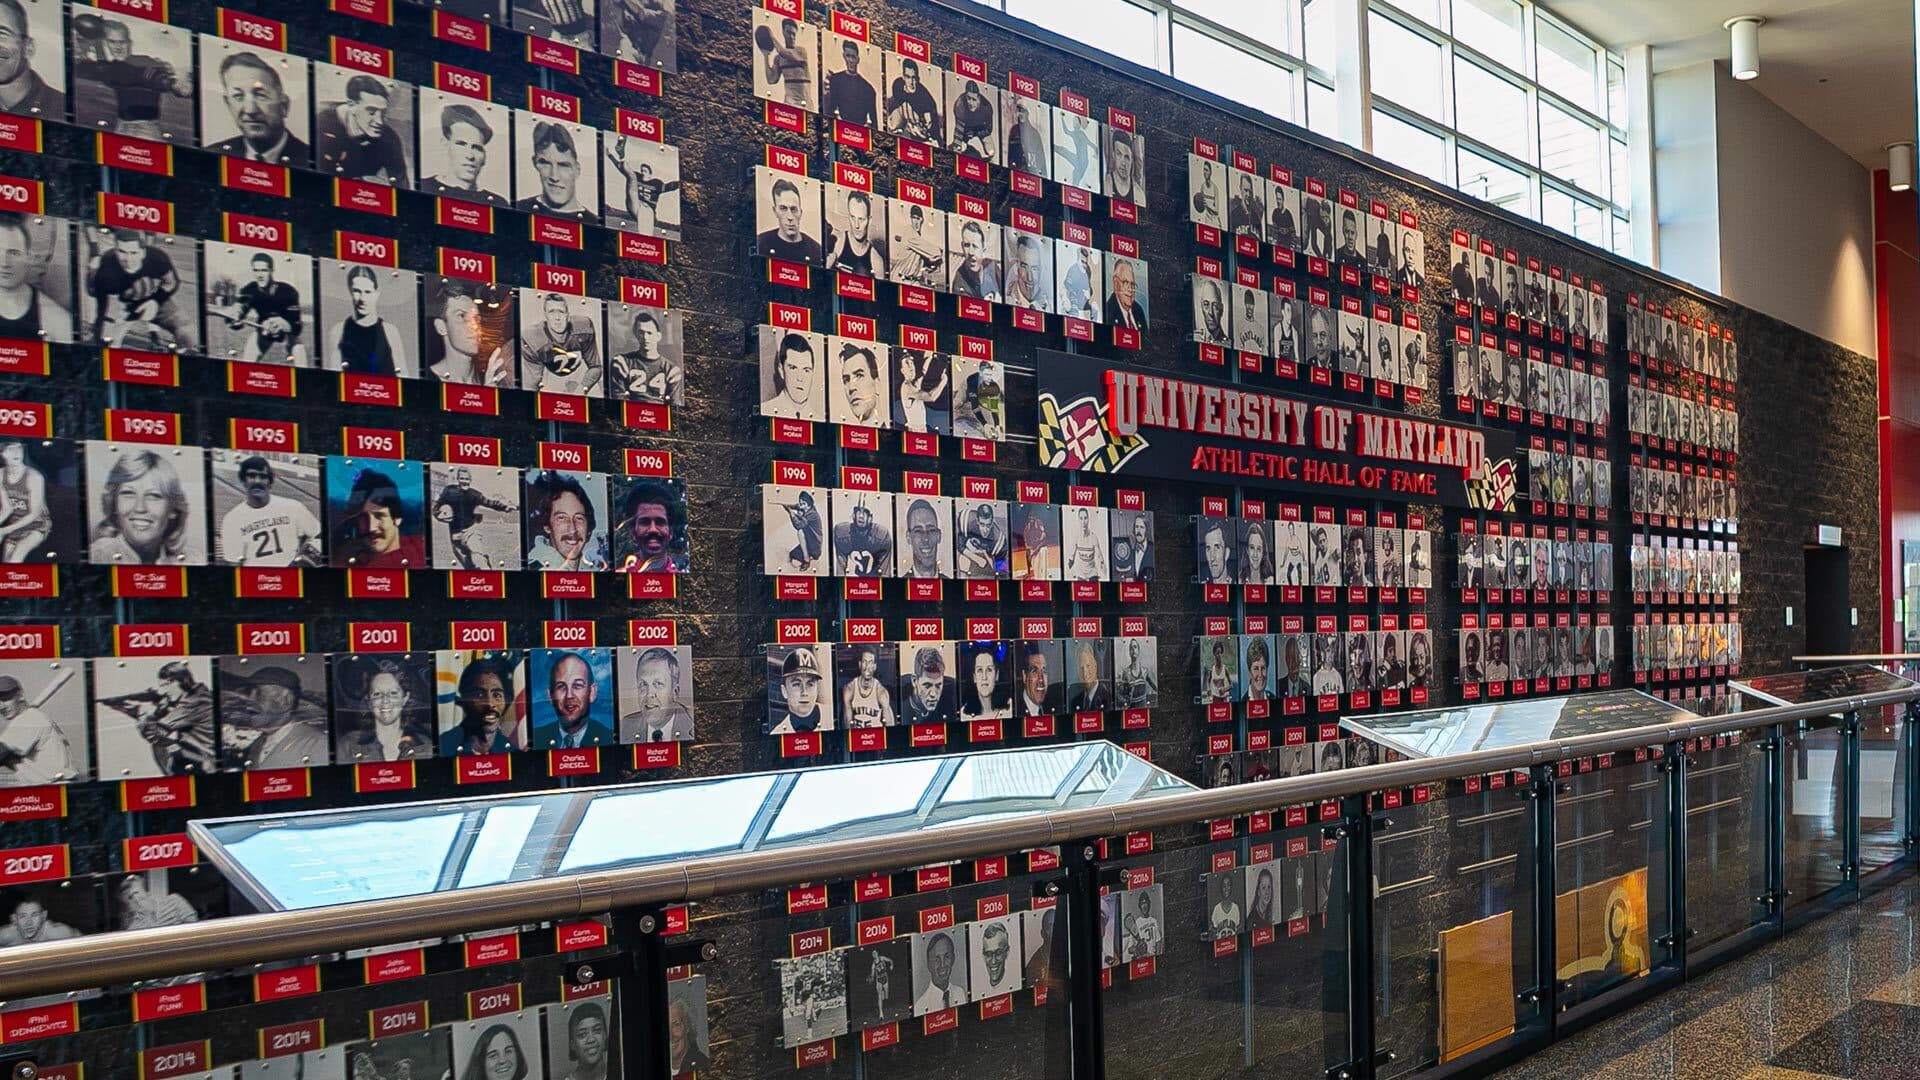 University of Maryland Athletics Hall of Fame wall